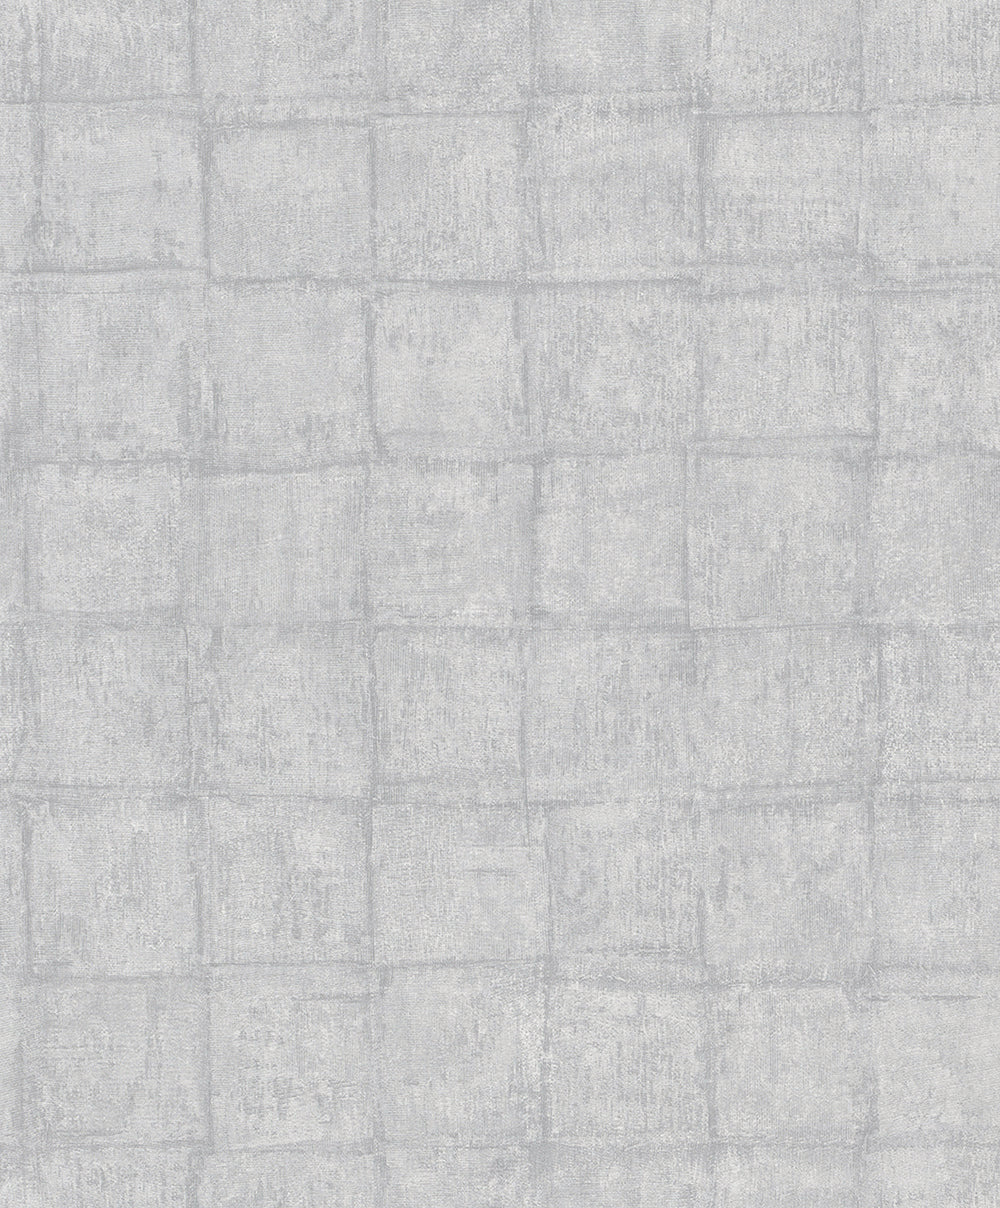 Botanica - Textured Tile industrial wallpaper Marburg Roll Grey  33971 